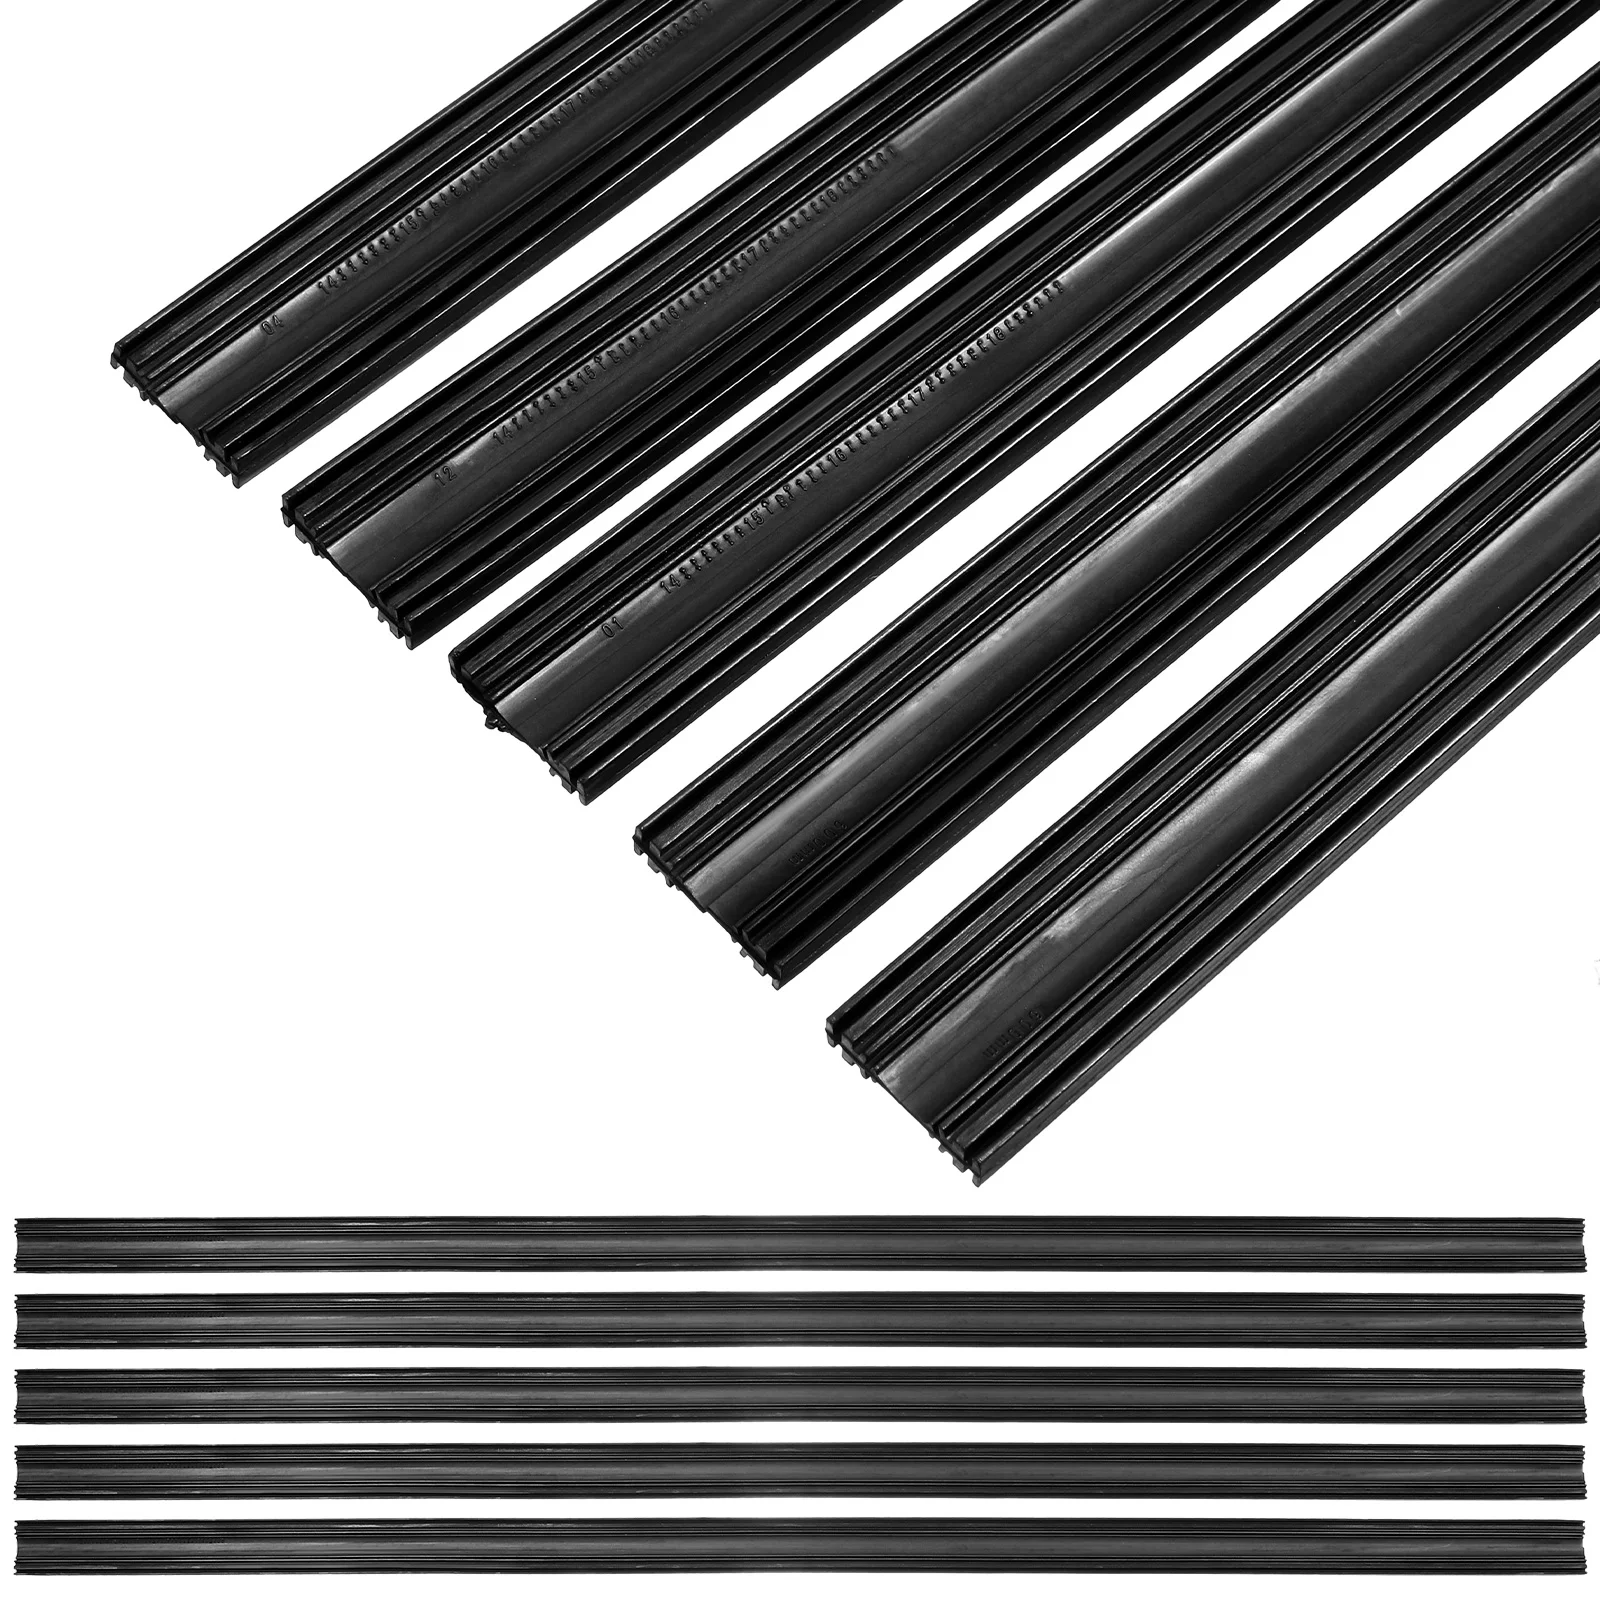 

10 Pcs Windshield Wiper Strips Car Window Wiper Rubber Refill Strips for Most Auto Cars Lorries Trucks